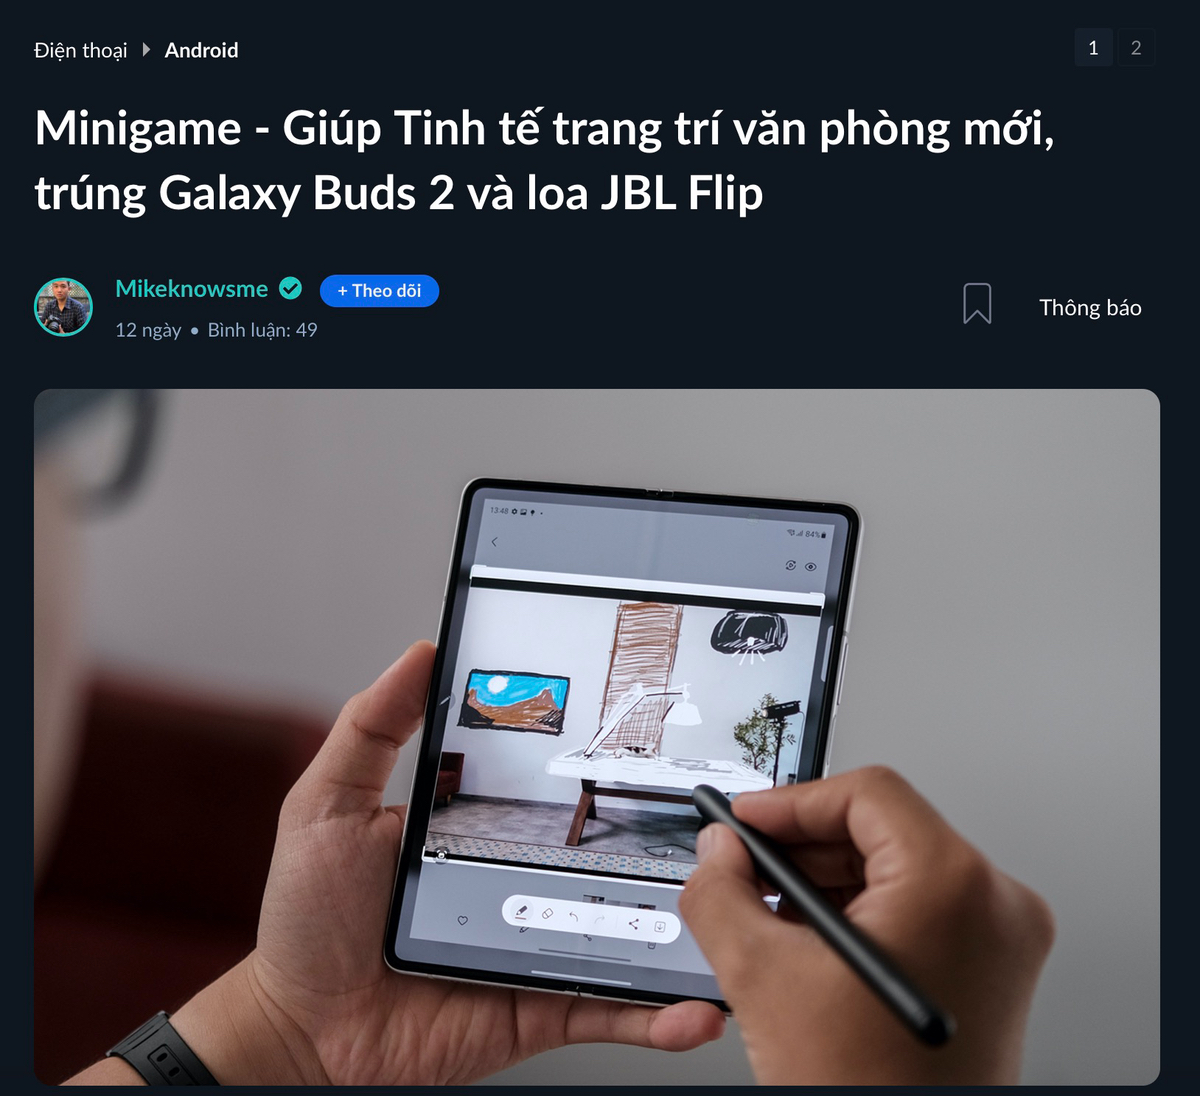 [Kết quả game Tinh Tế]: Tặng Galaxy Buds 2 và loa JBL Flip